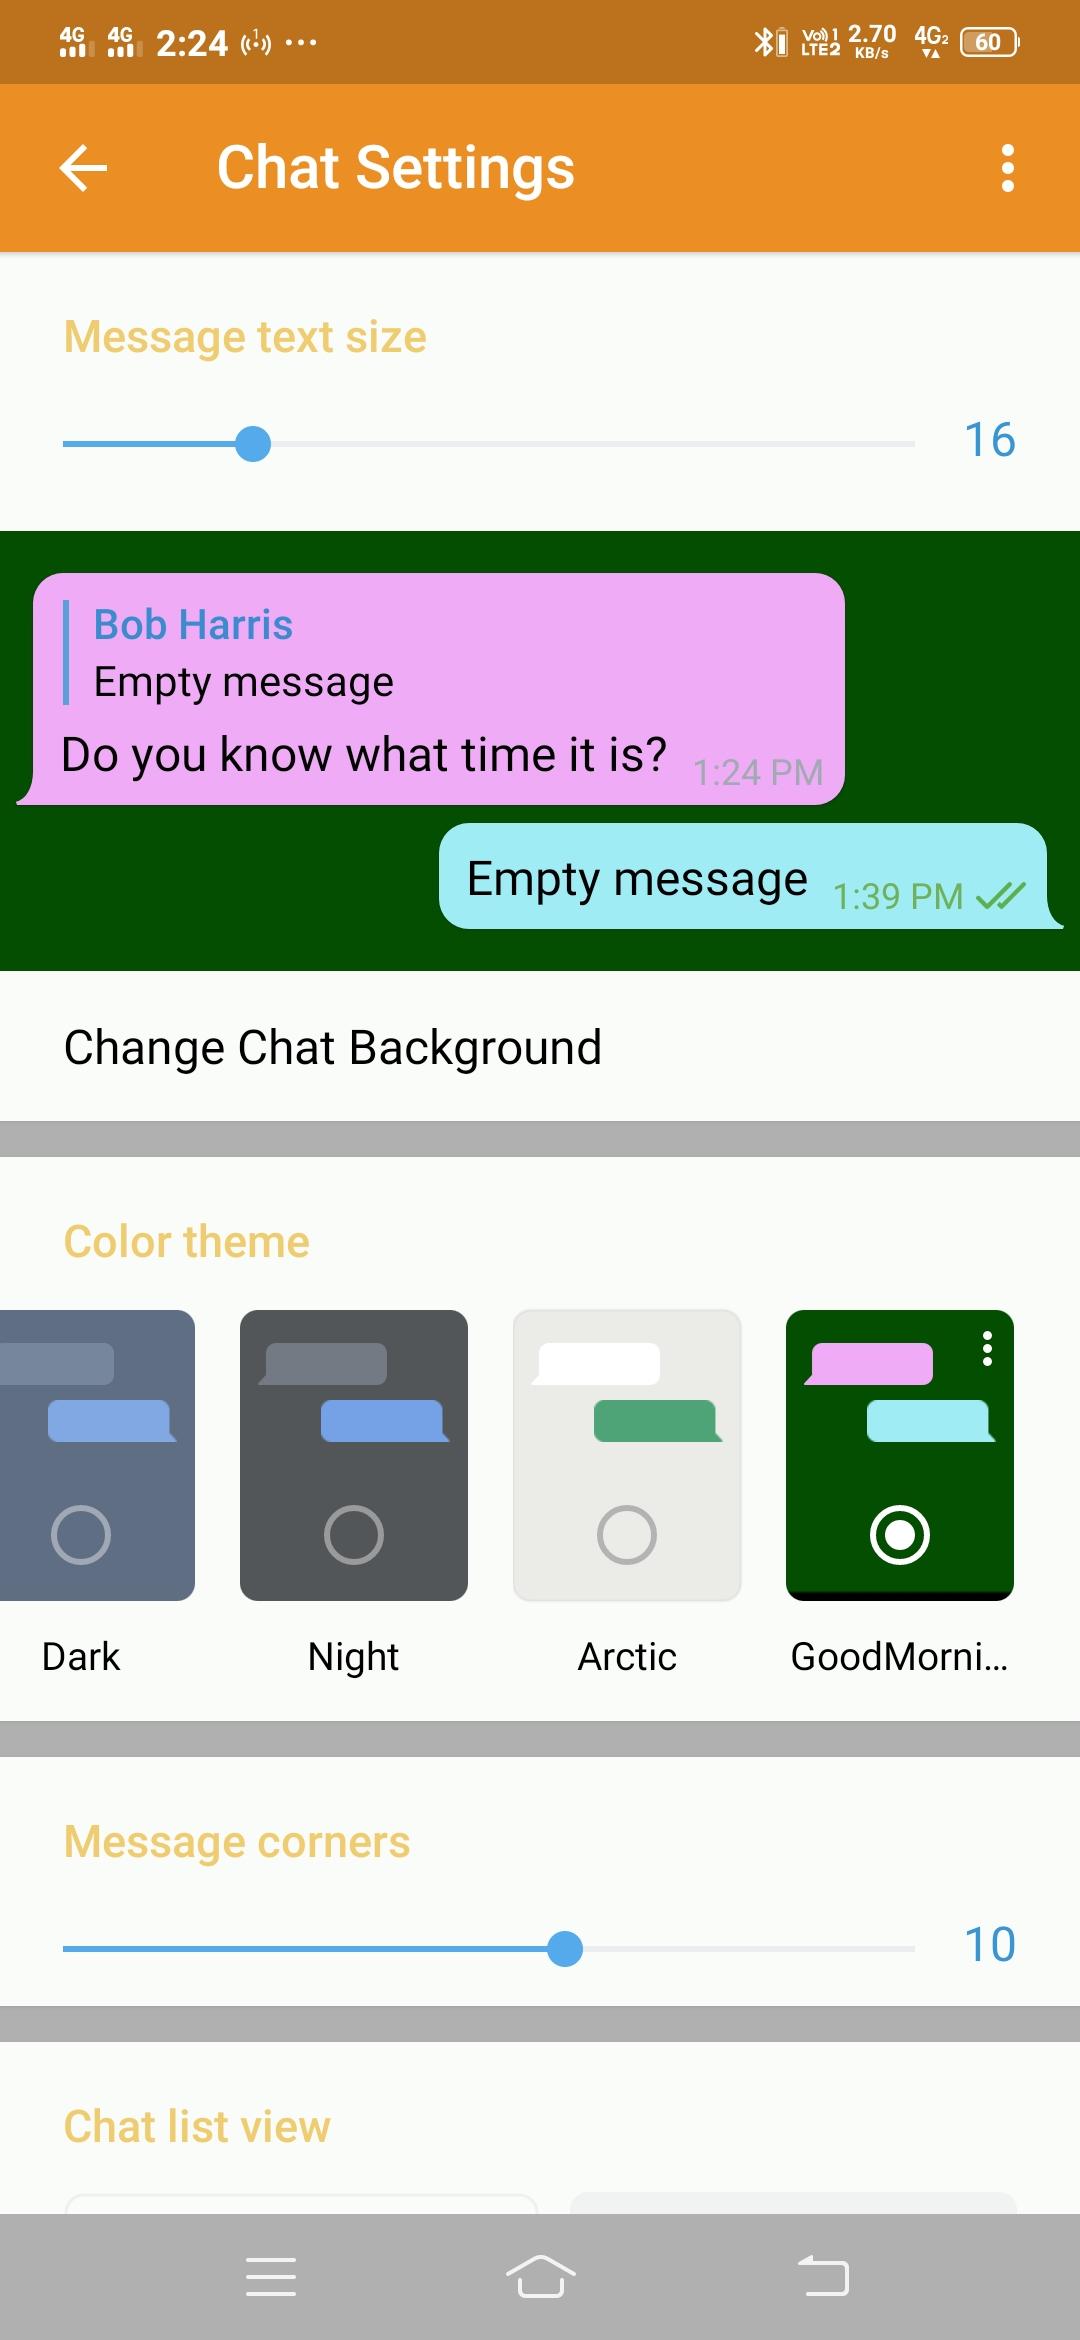 GoodMorning Messenger - New Telegram 1.0.25 Screenshot 2